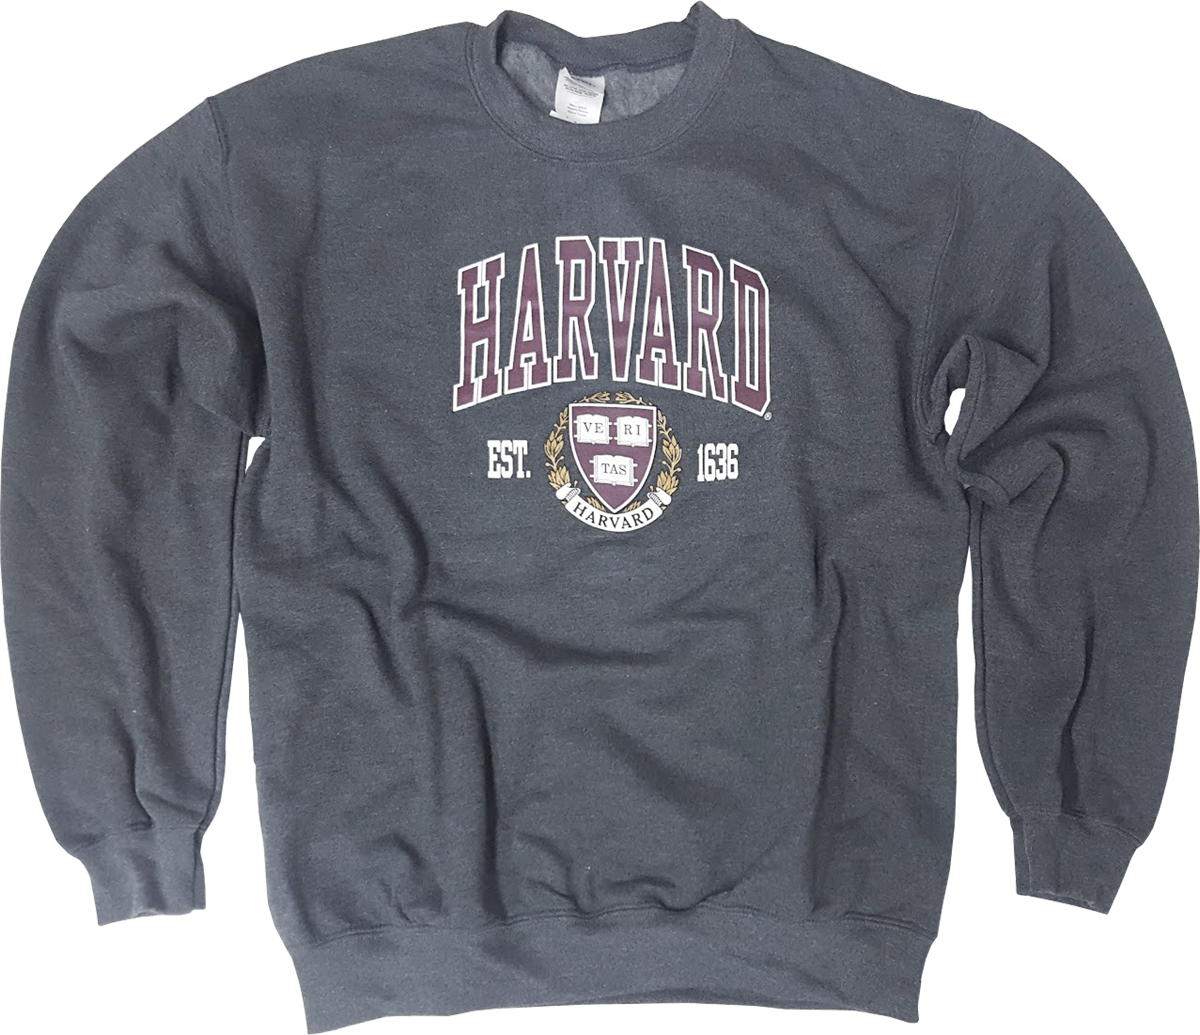 harvard university sweatshirt